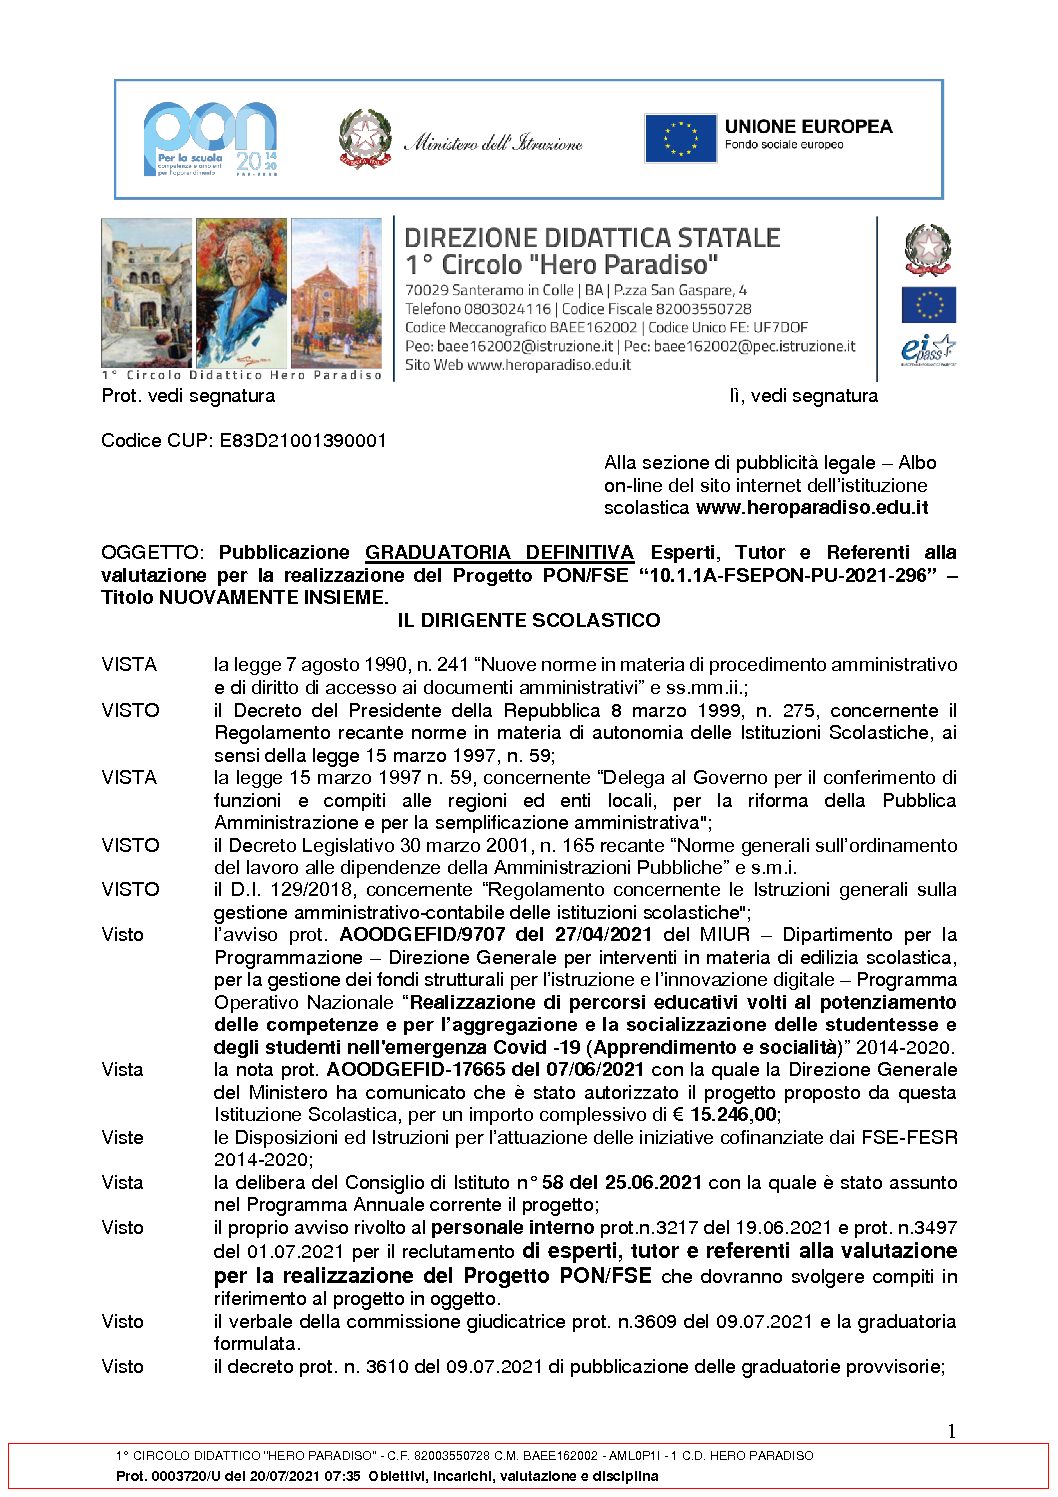 6._Graduatoria_DEFINITIVA_Interni_PON_2021-296.pdf.pades